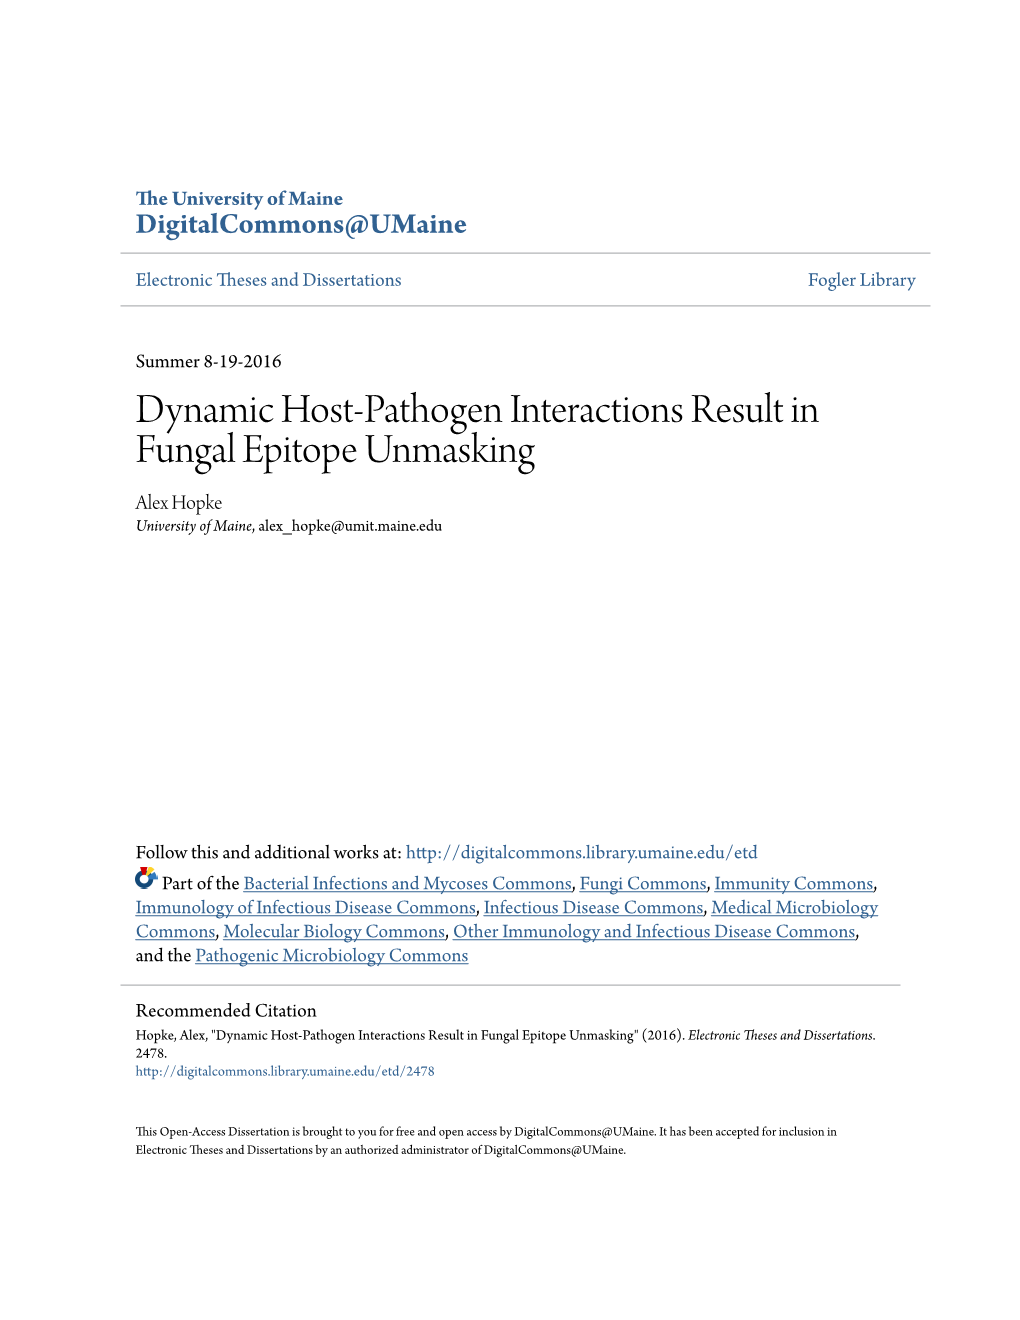 Dynamic Host-Pathogen Interactions Result in Fungal Epitope Unmasking Alex Hopke University of Maine, Alex Hopke@Umit.Maine.Edu